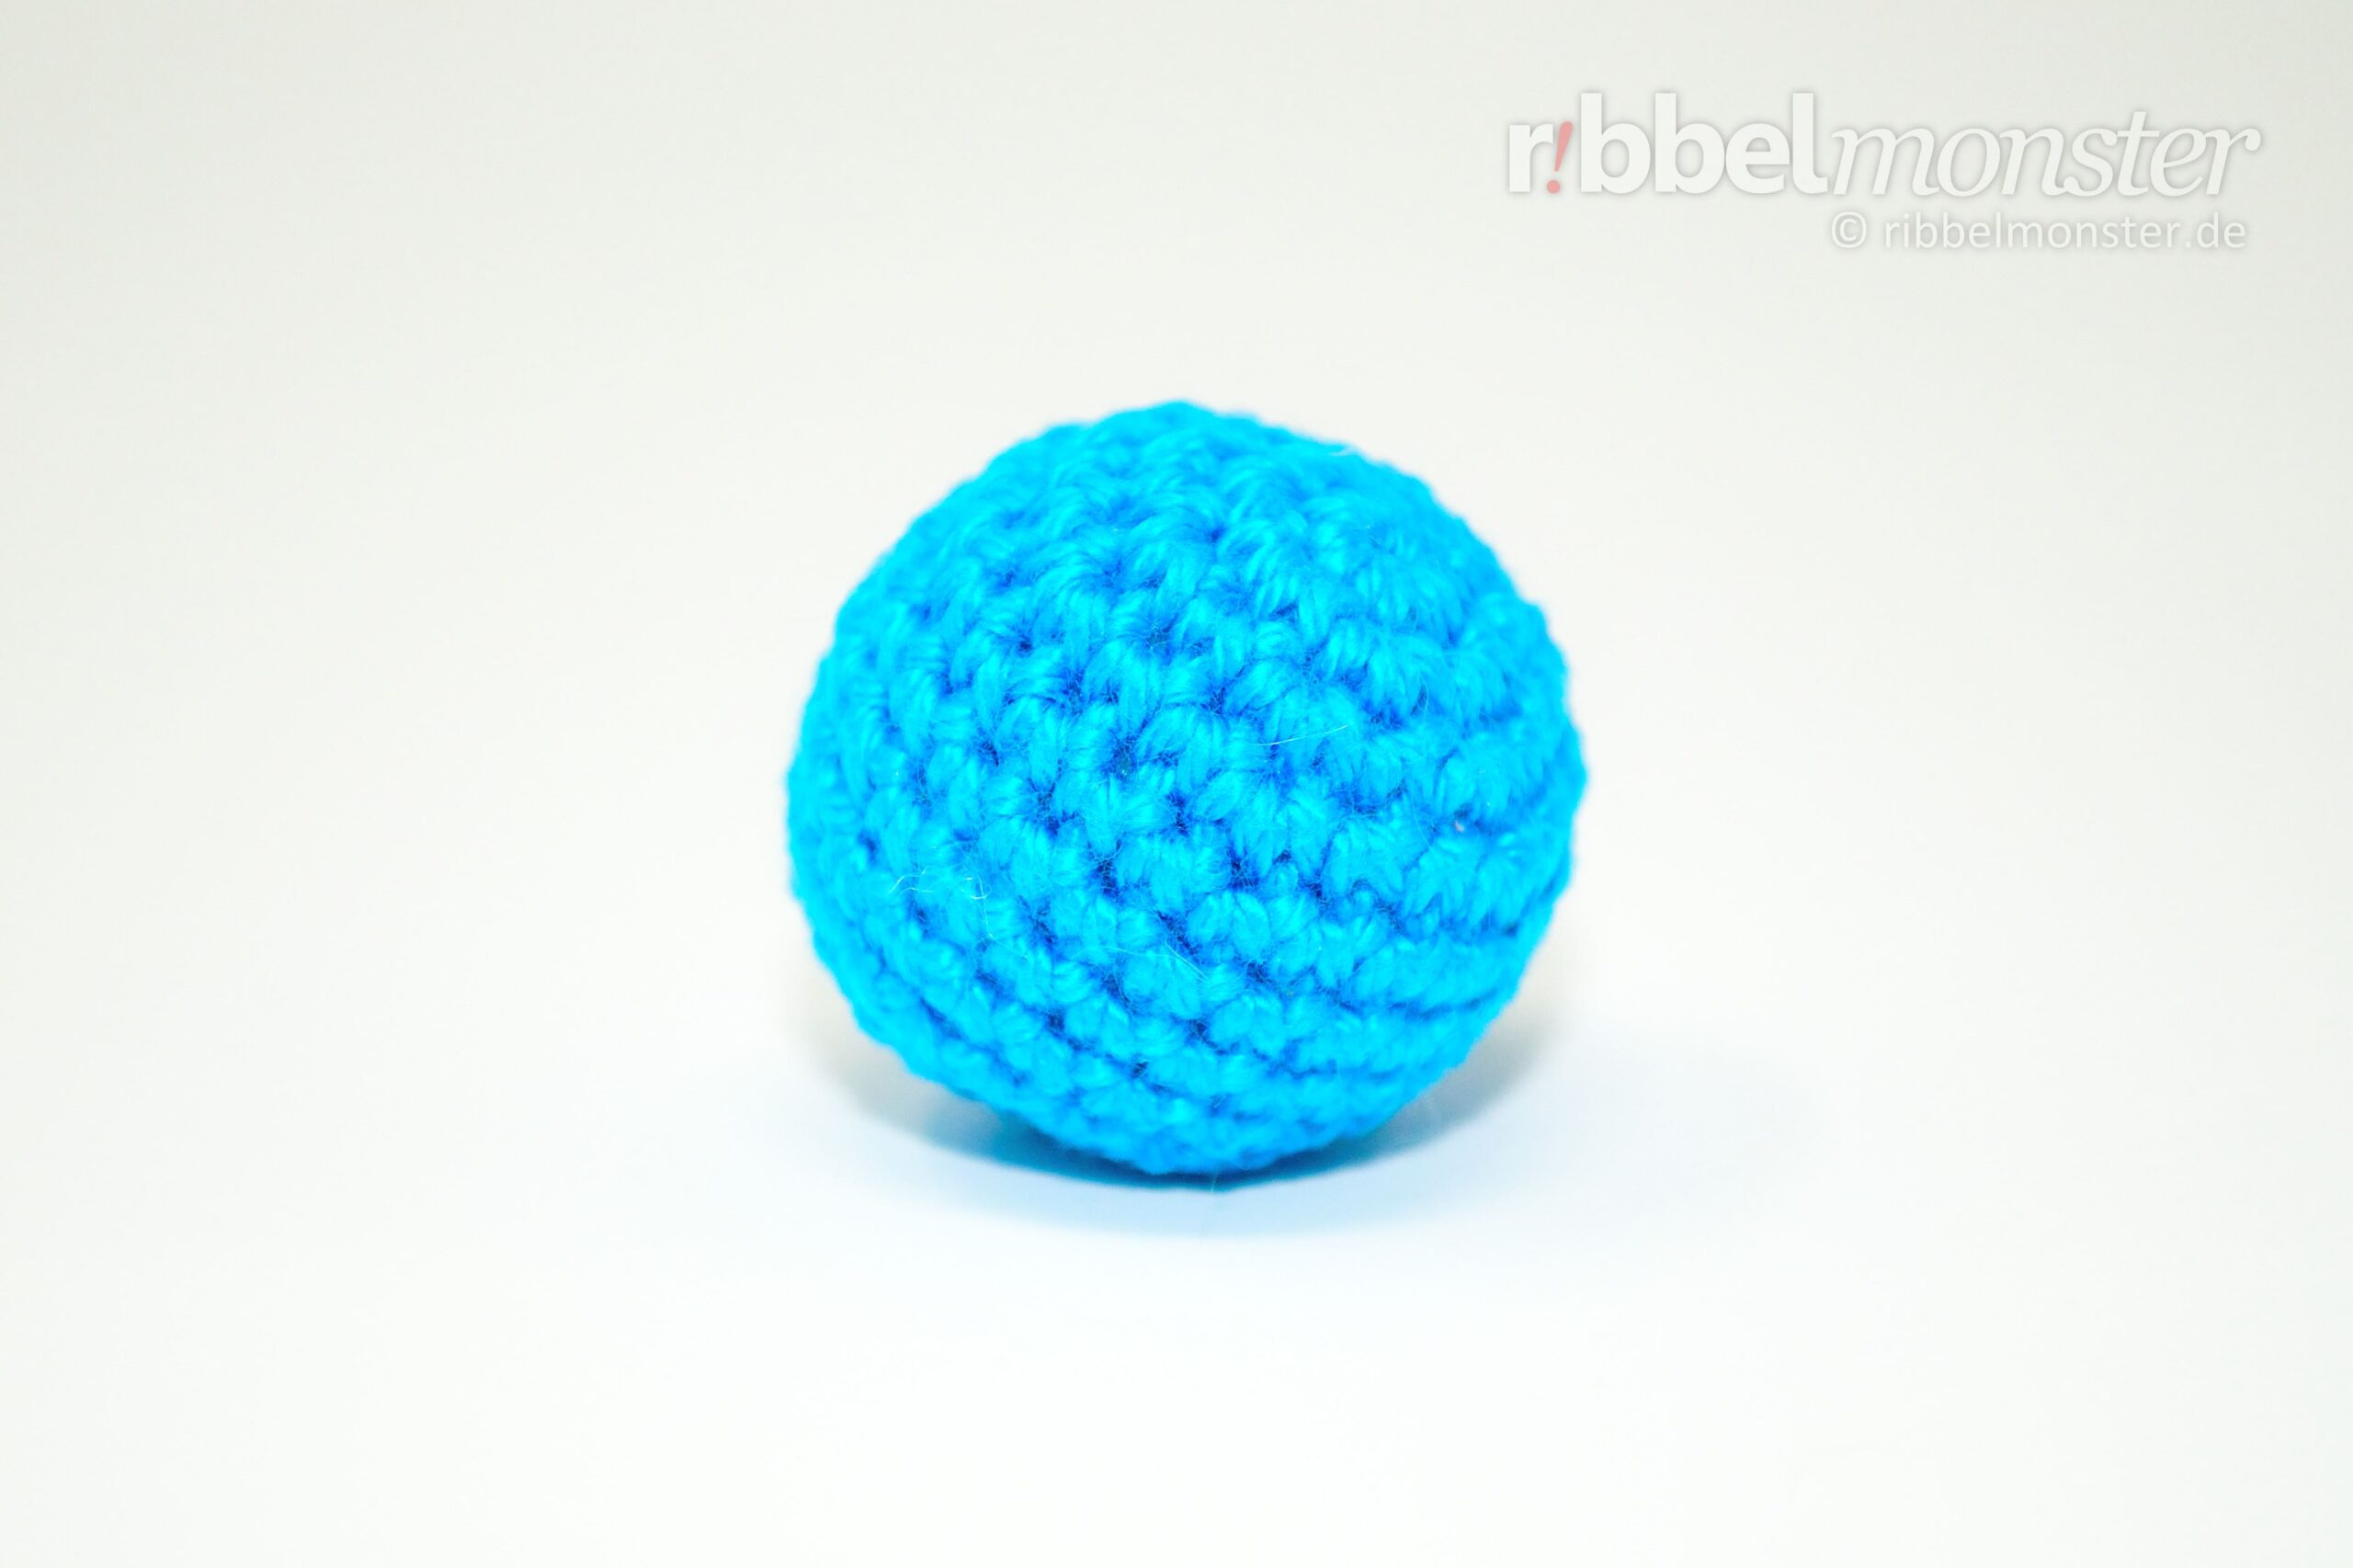 Amigurumi – Crochet Simple Smallest Ball